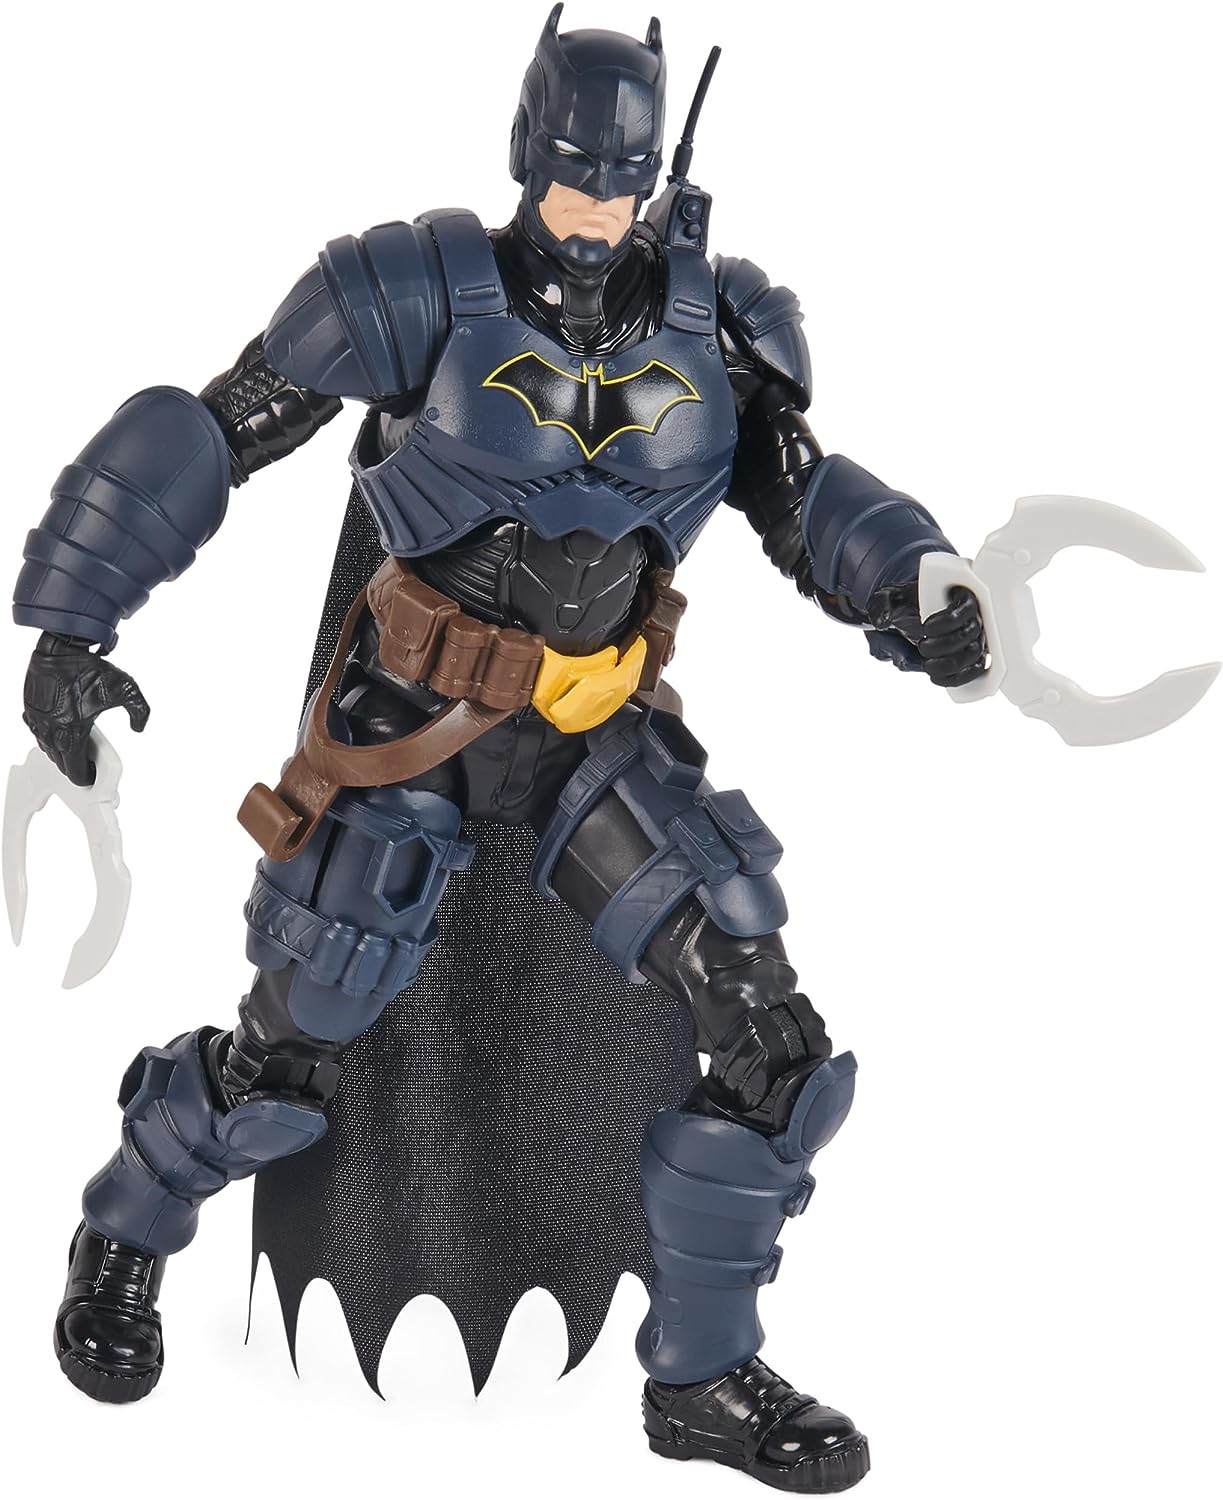 DC Comics: Batman Adventures Batman Action Figure $11.36 + Free Shipping w/ Prime or on $35+